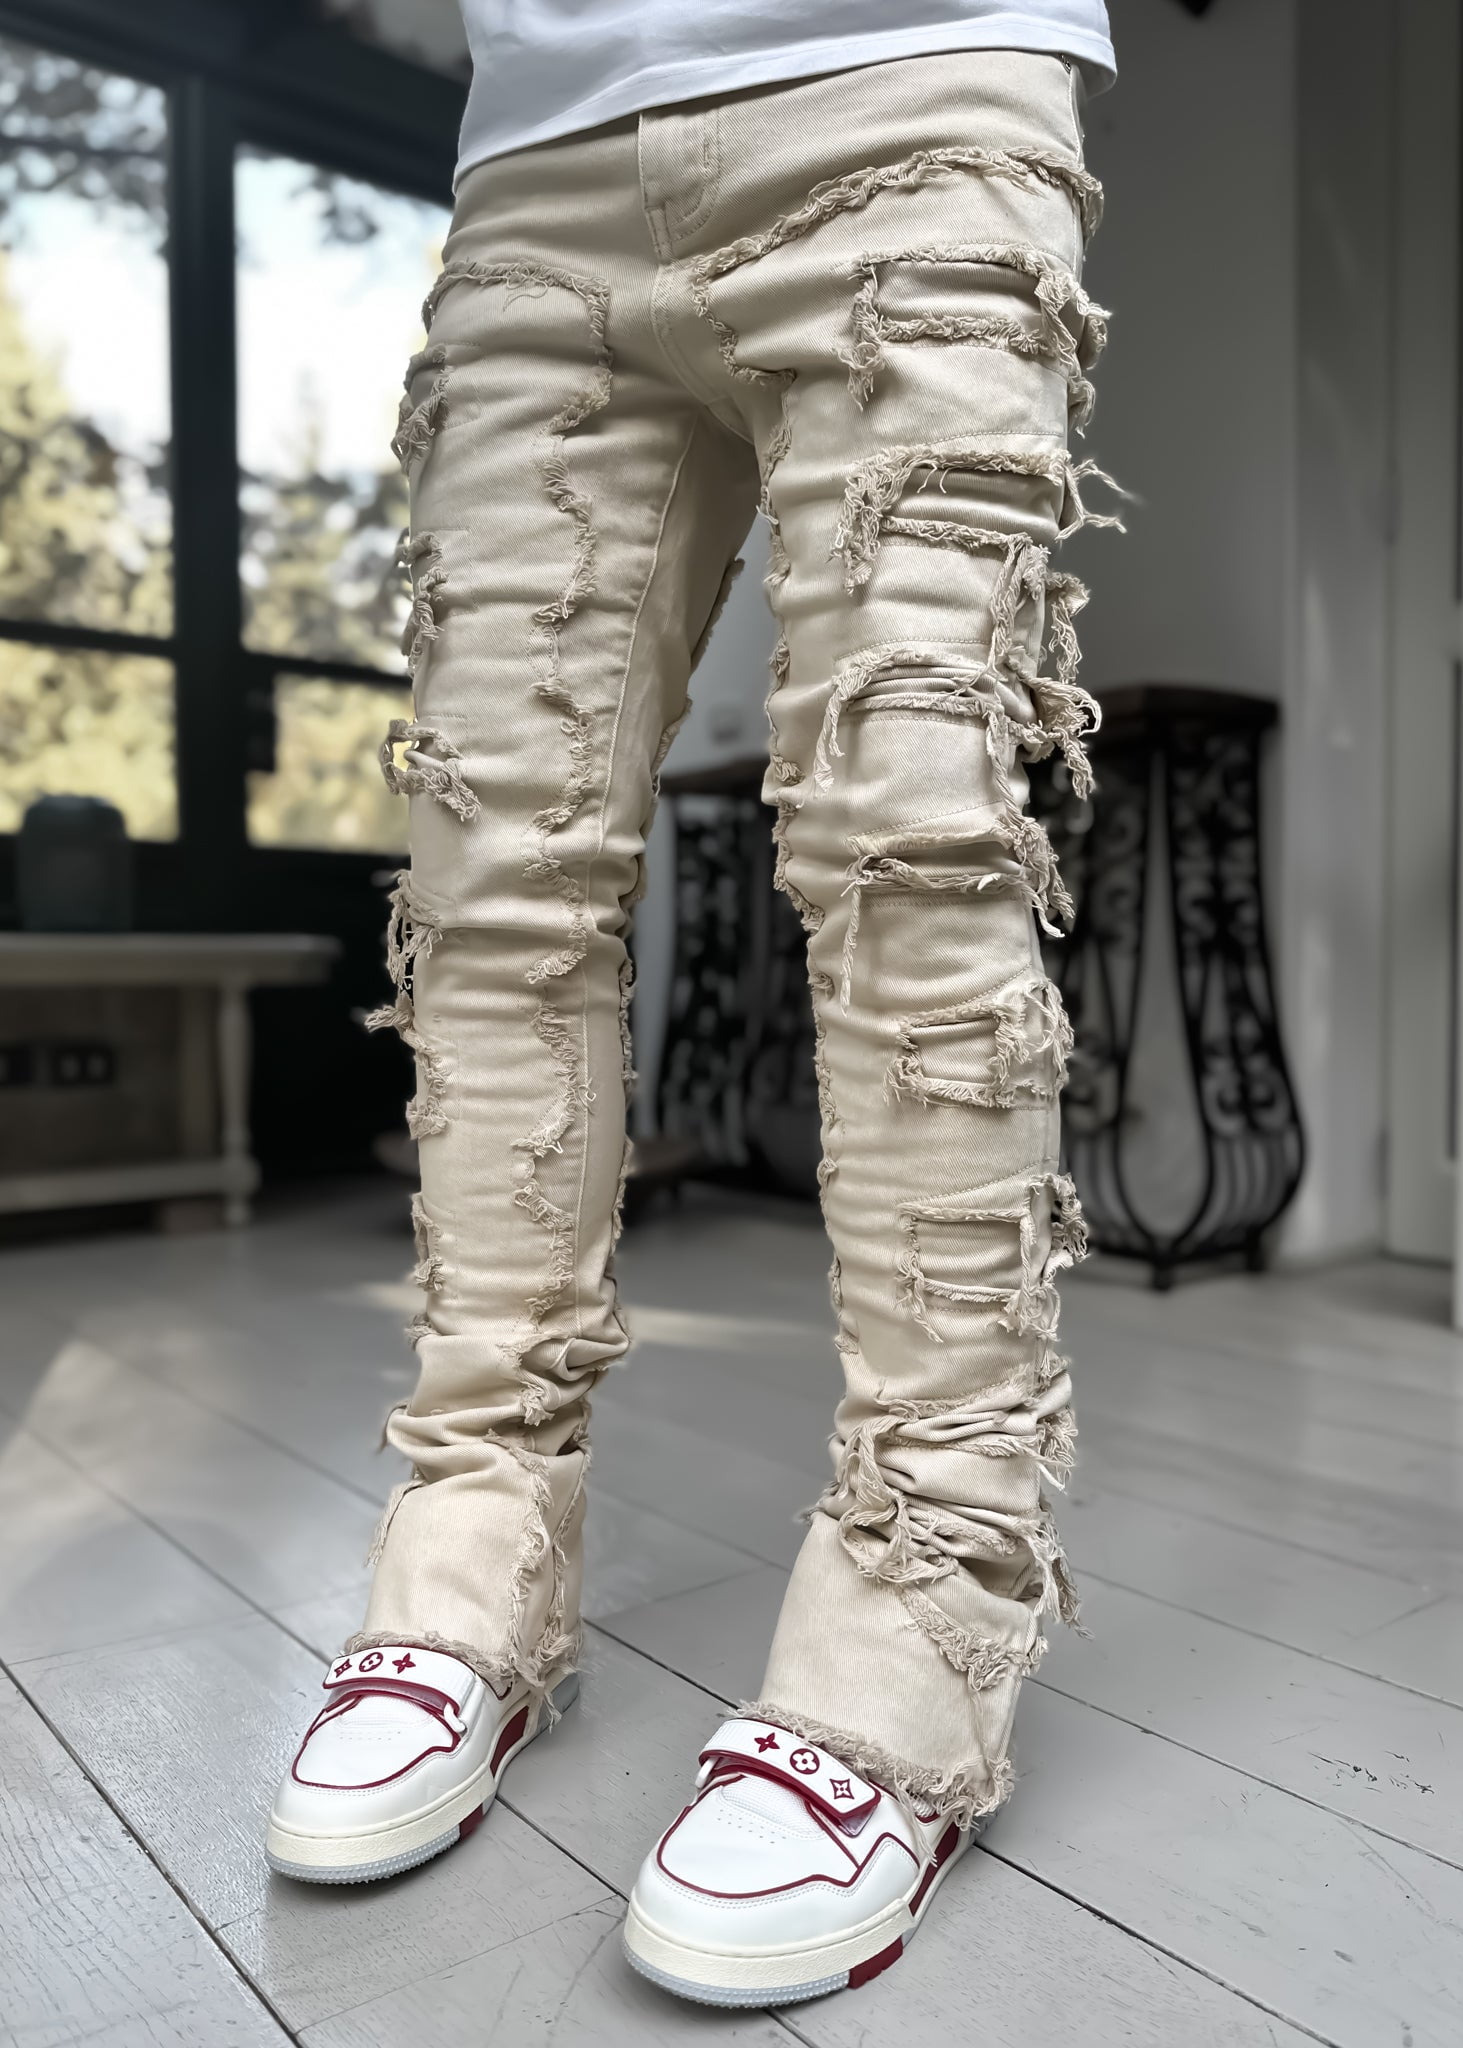 Men Regular Stacked Jeans Patch Distressed Destroyed Straight Denim Pants  Streetwear 